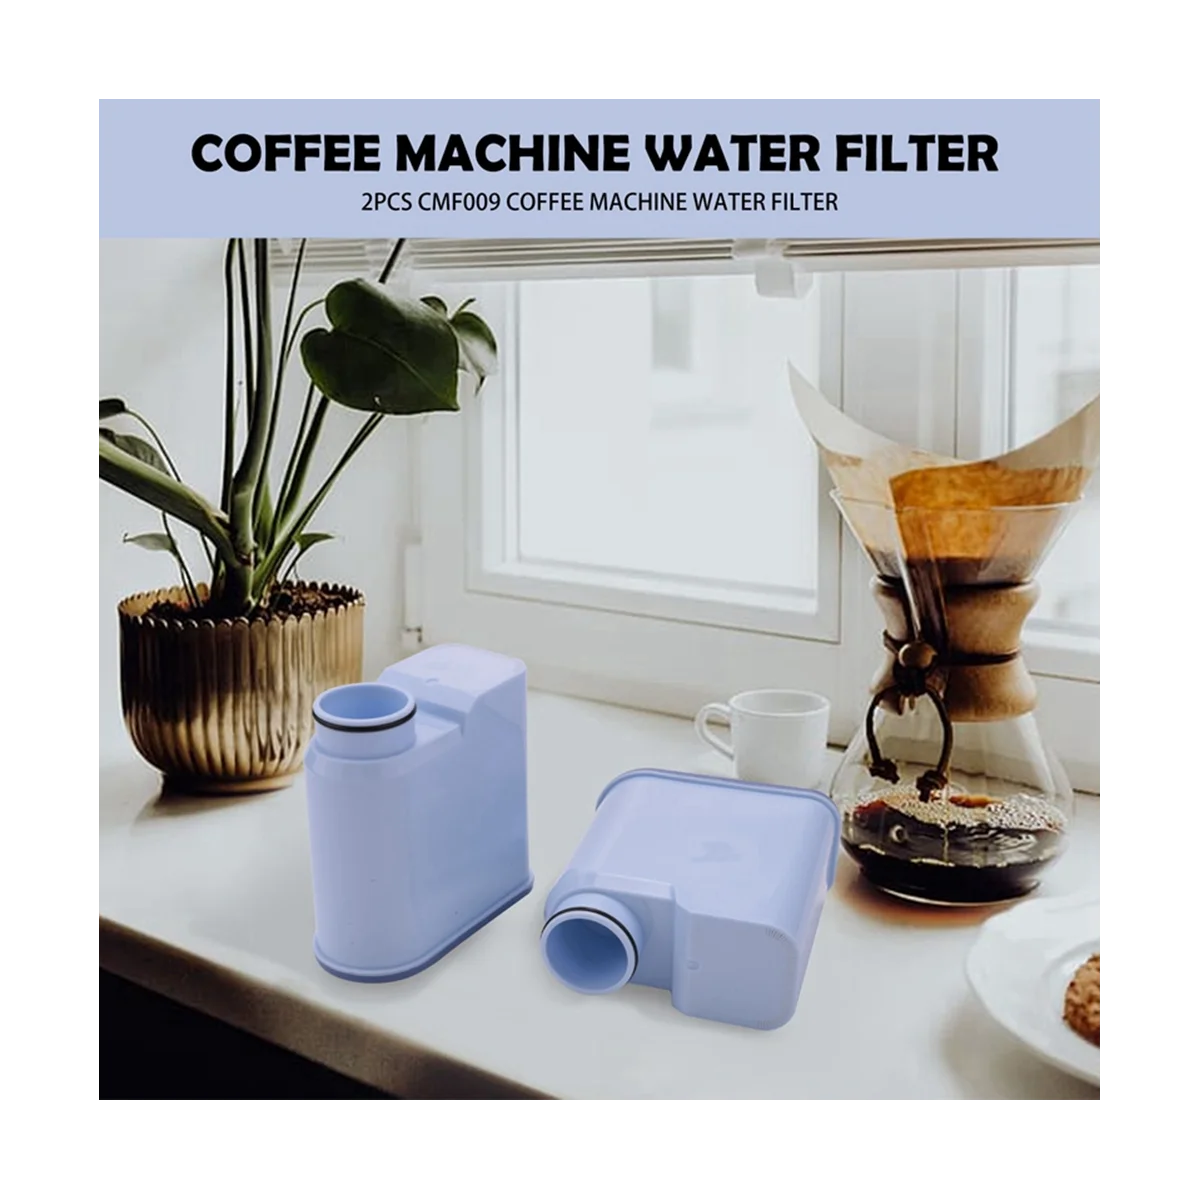 Water filter Saeco/Phillips AquaClean coffee makers CA6903/10 | plentyShop  LTS